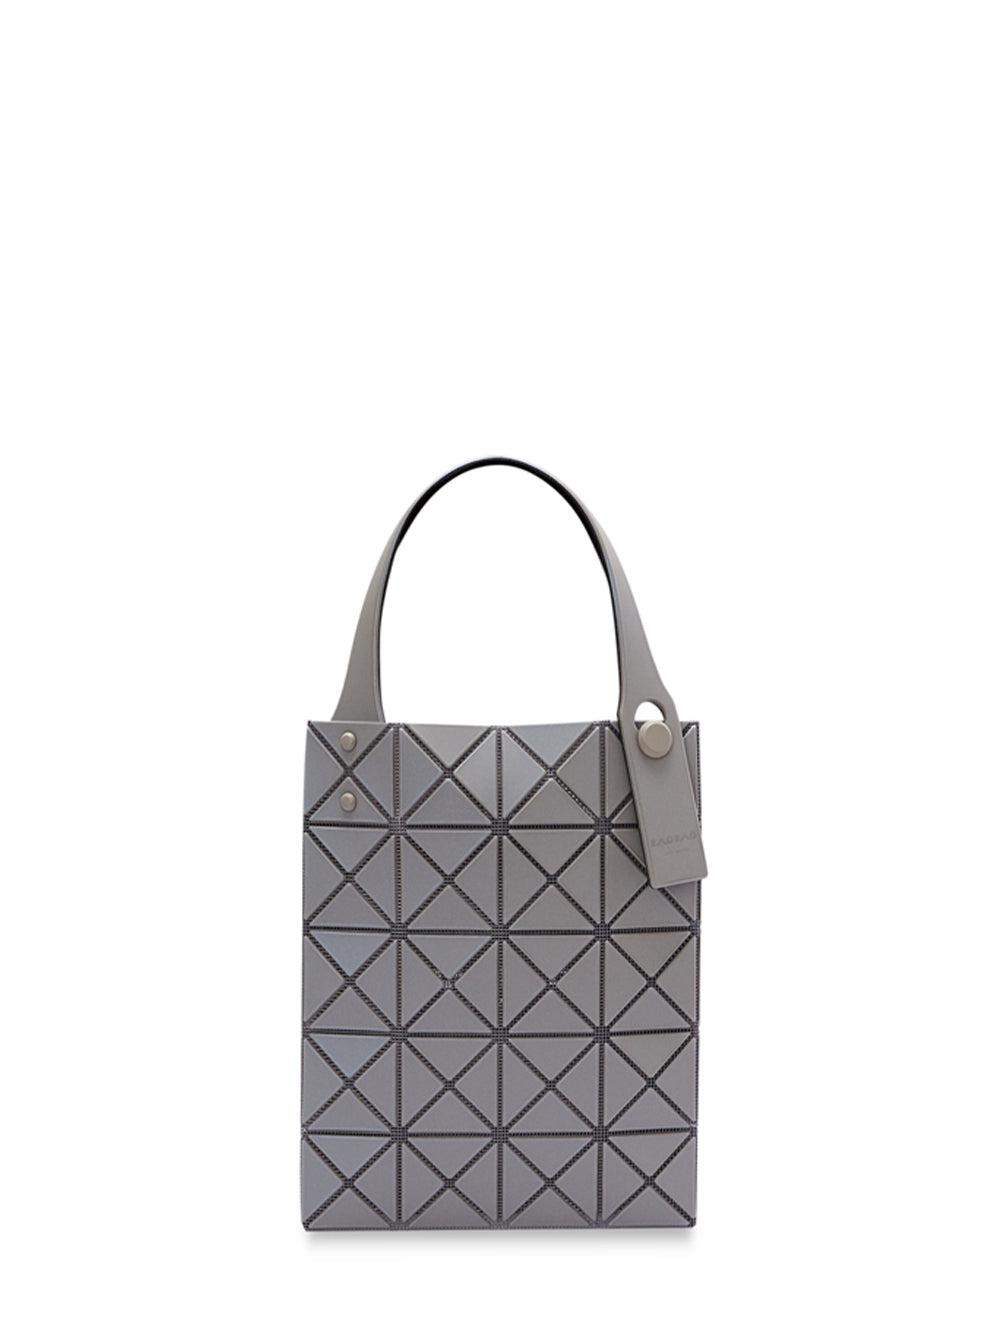 PRISM PLUS Handbag (Small) (Gray Beige)